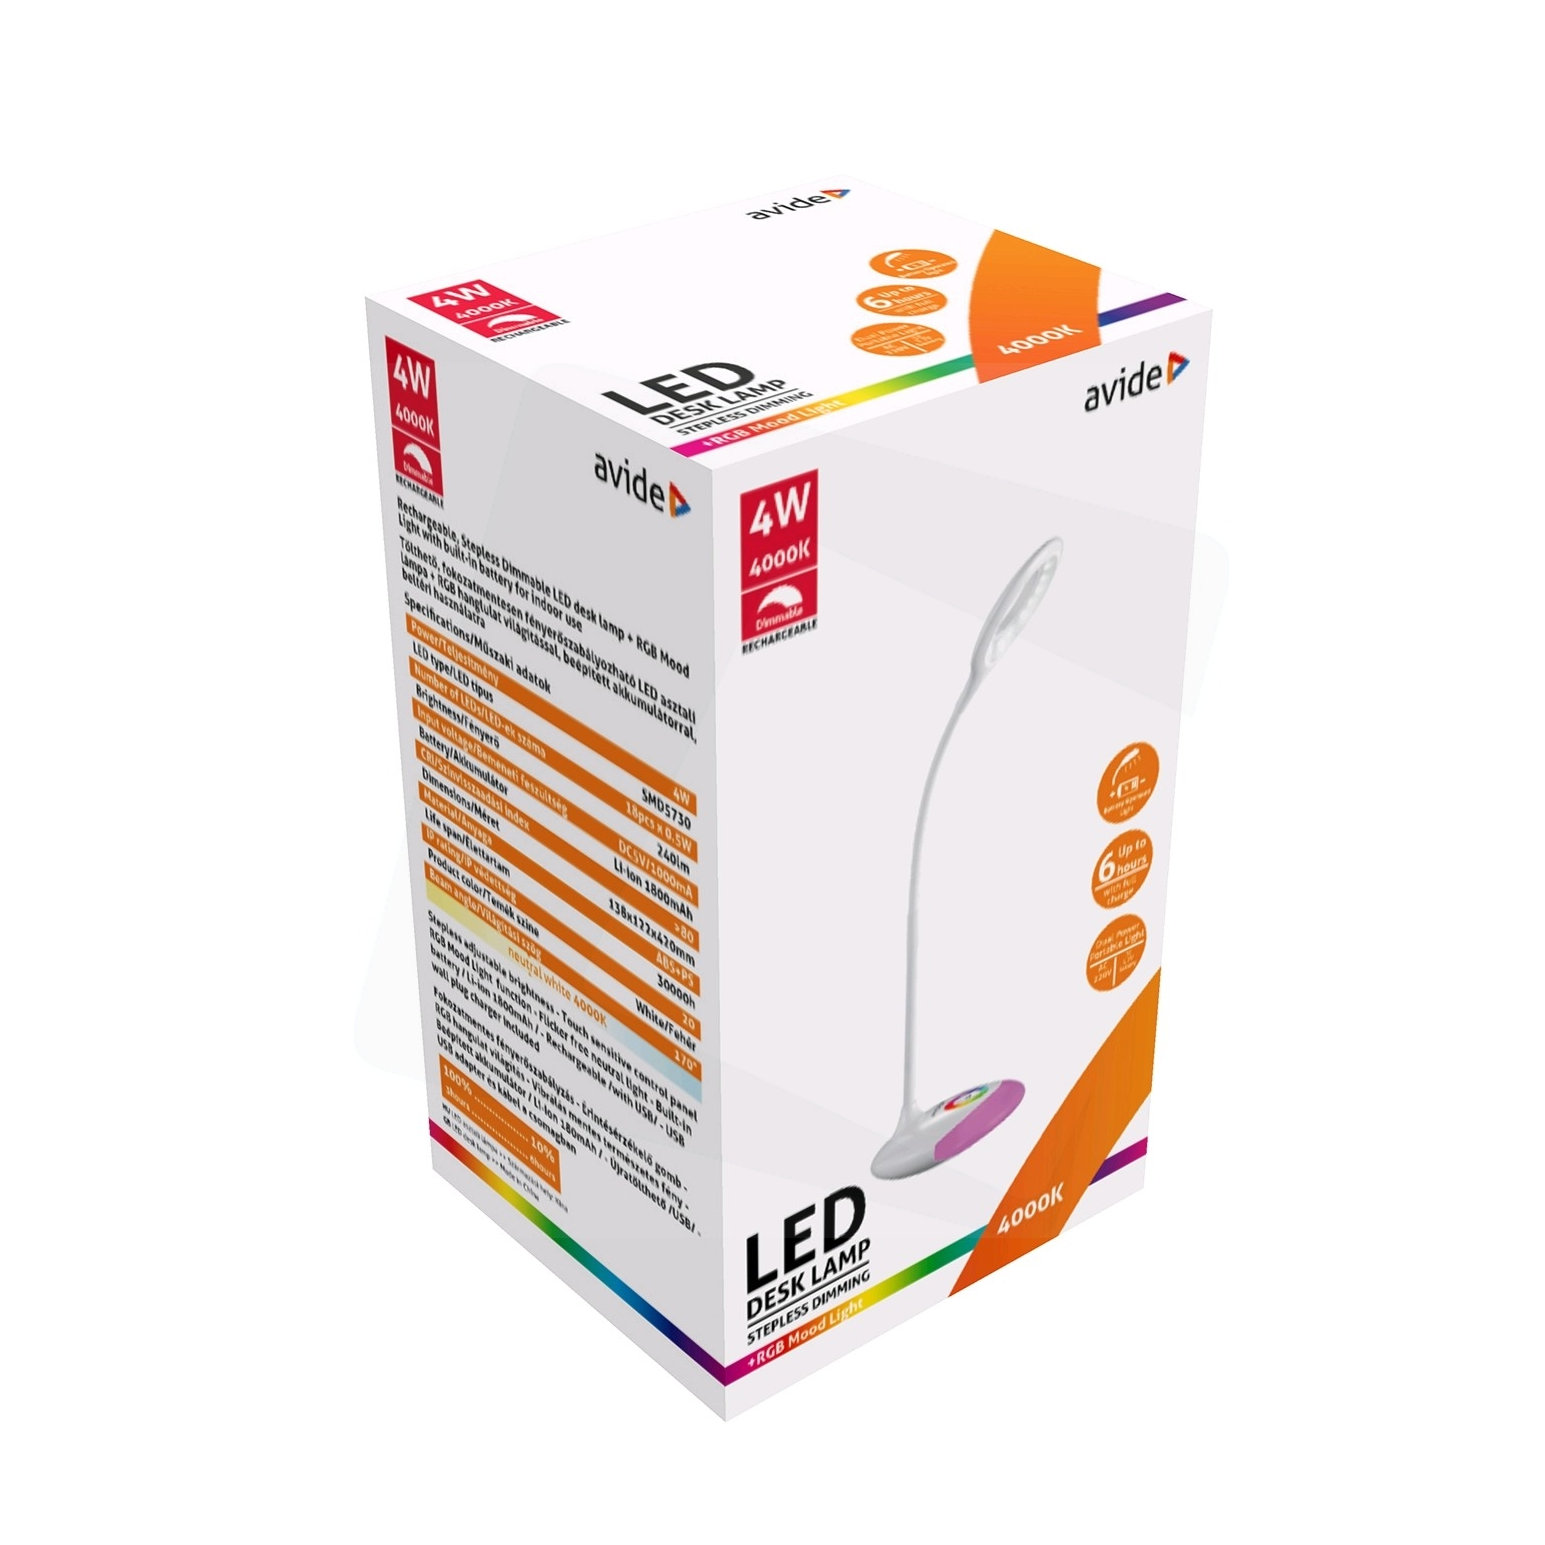 Stolna-LED-RGB-lampa-s-flexibilnym-ramenom-4W-240lm-biela-farba-1.jpg